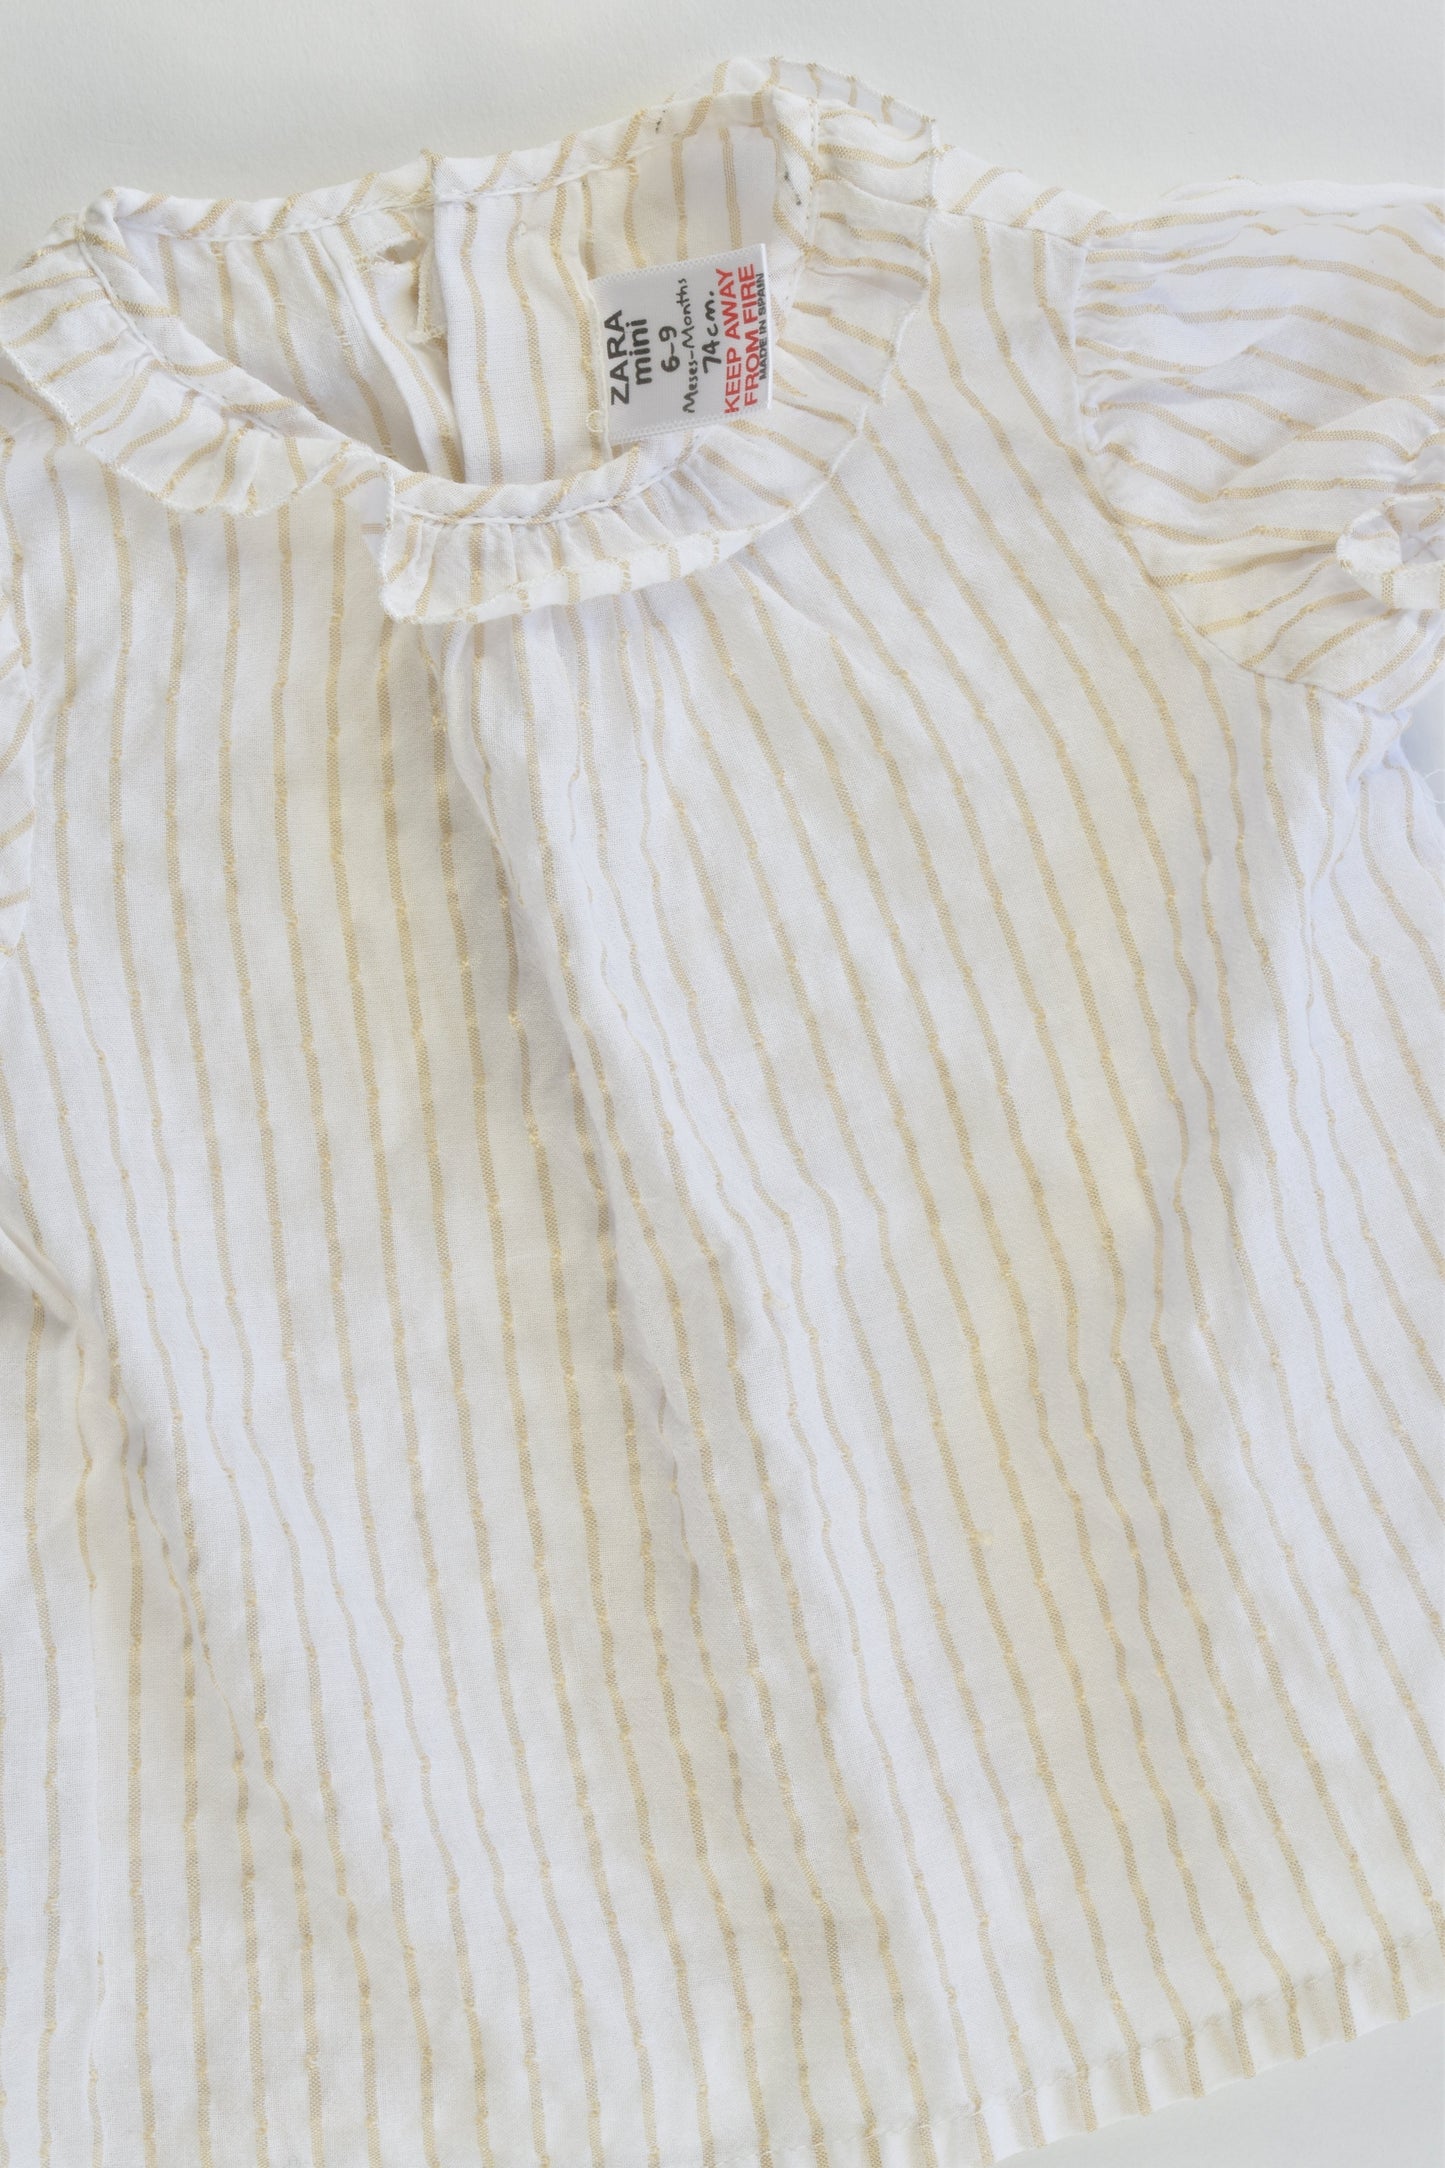 Zara Size 6-9 months (74 cm) Shirt